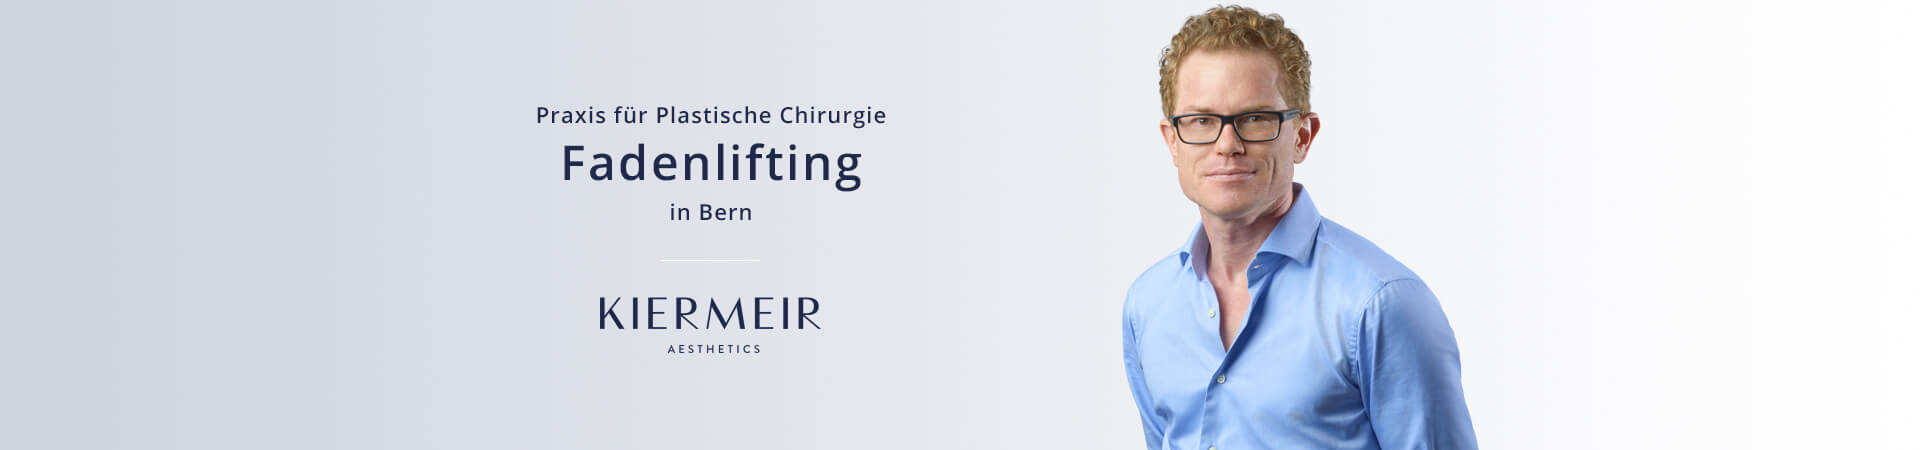 Fadenlifting in Bern - Dr. David Kiermeir 